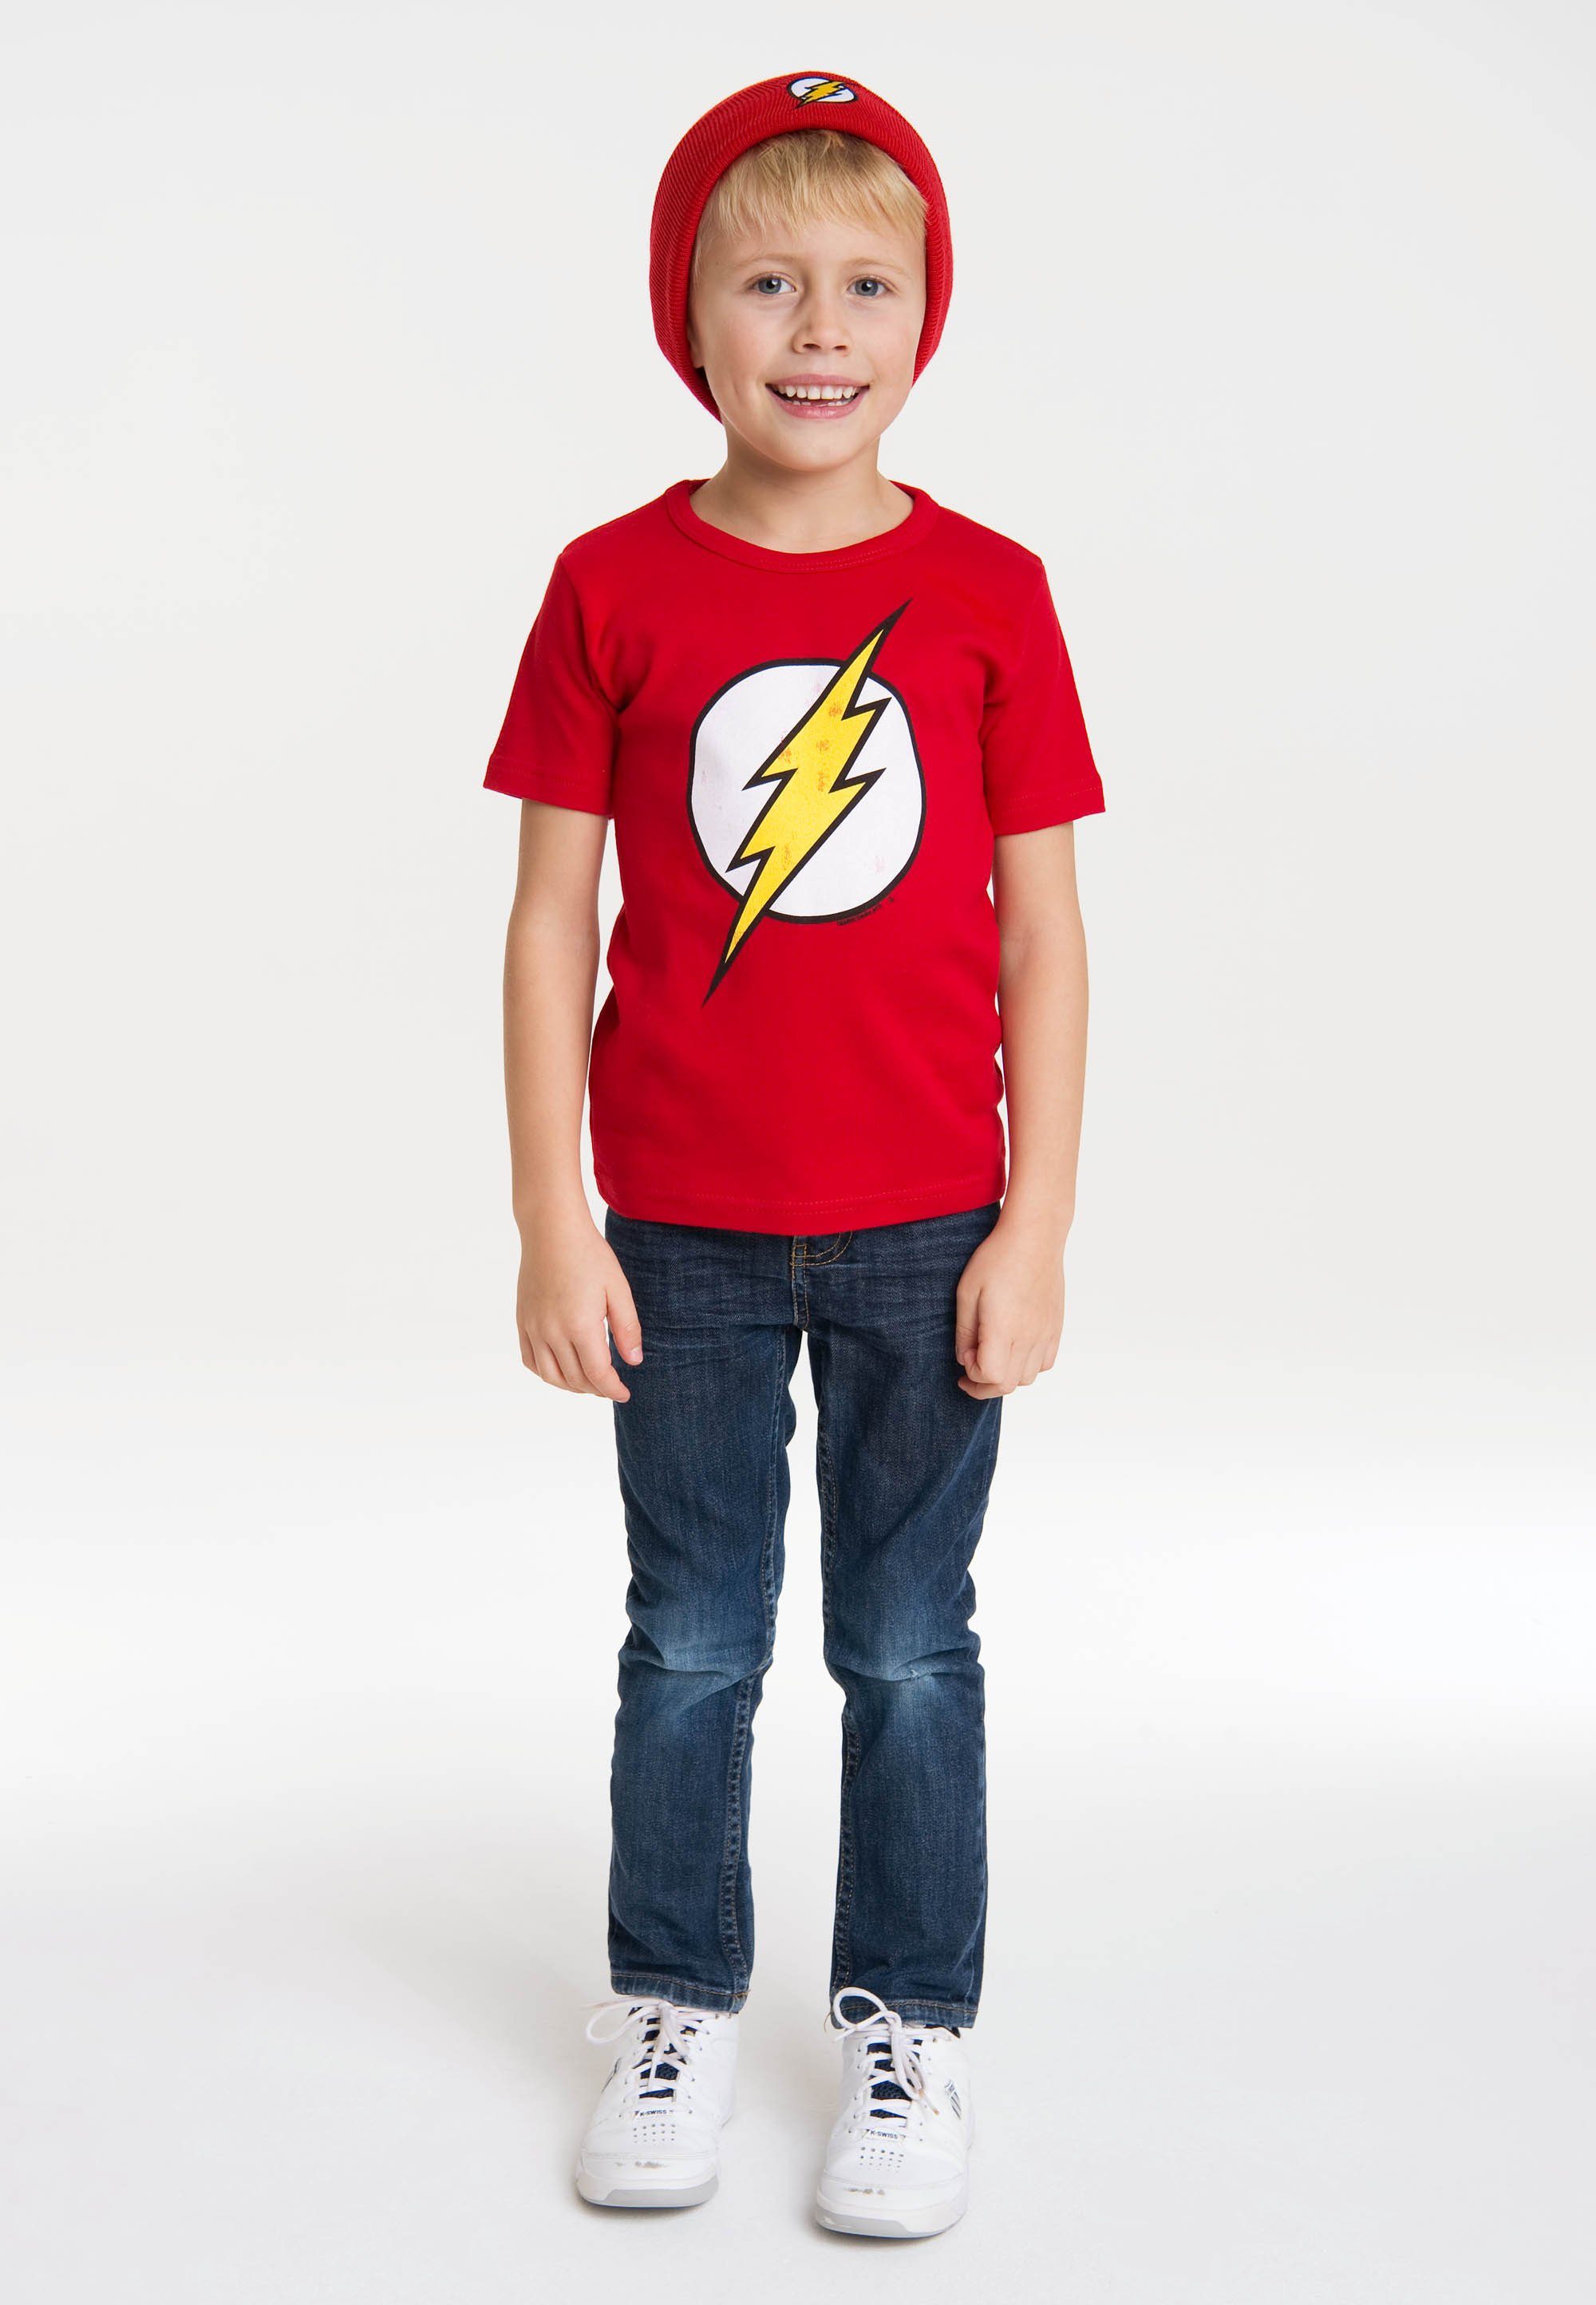 Logo - Flash-Logo T-Shirt coolem LOGOSHIRT mit Flash DC The